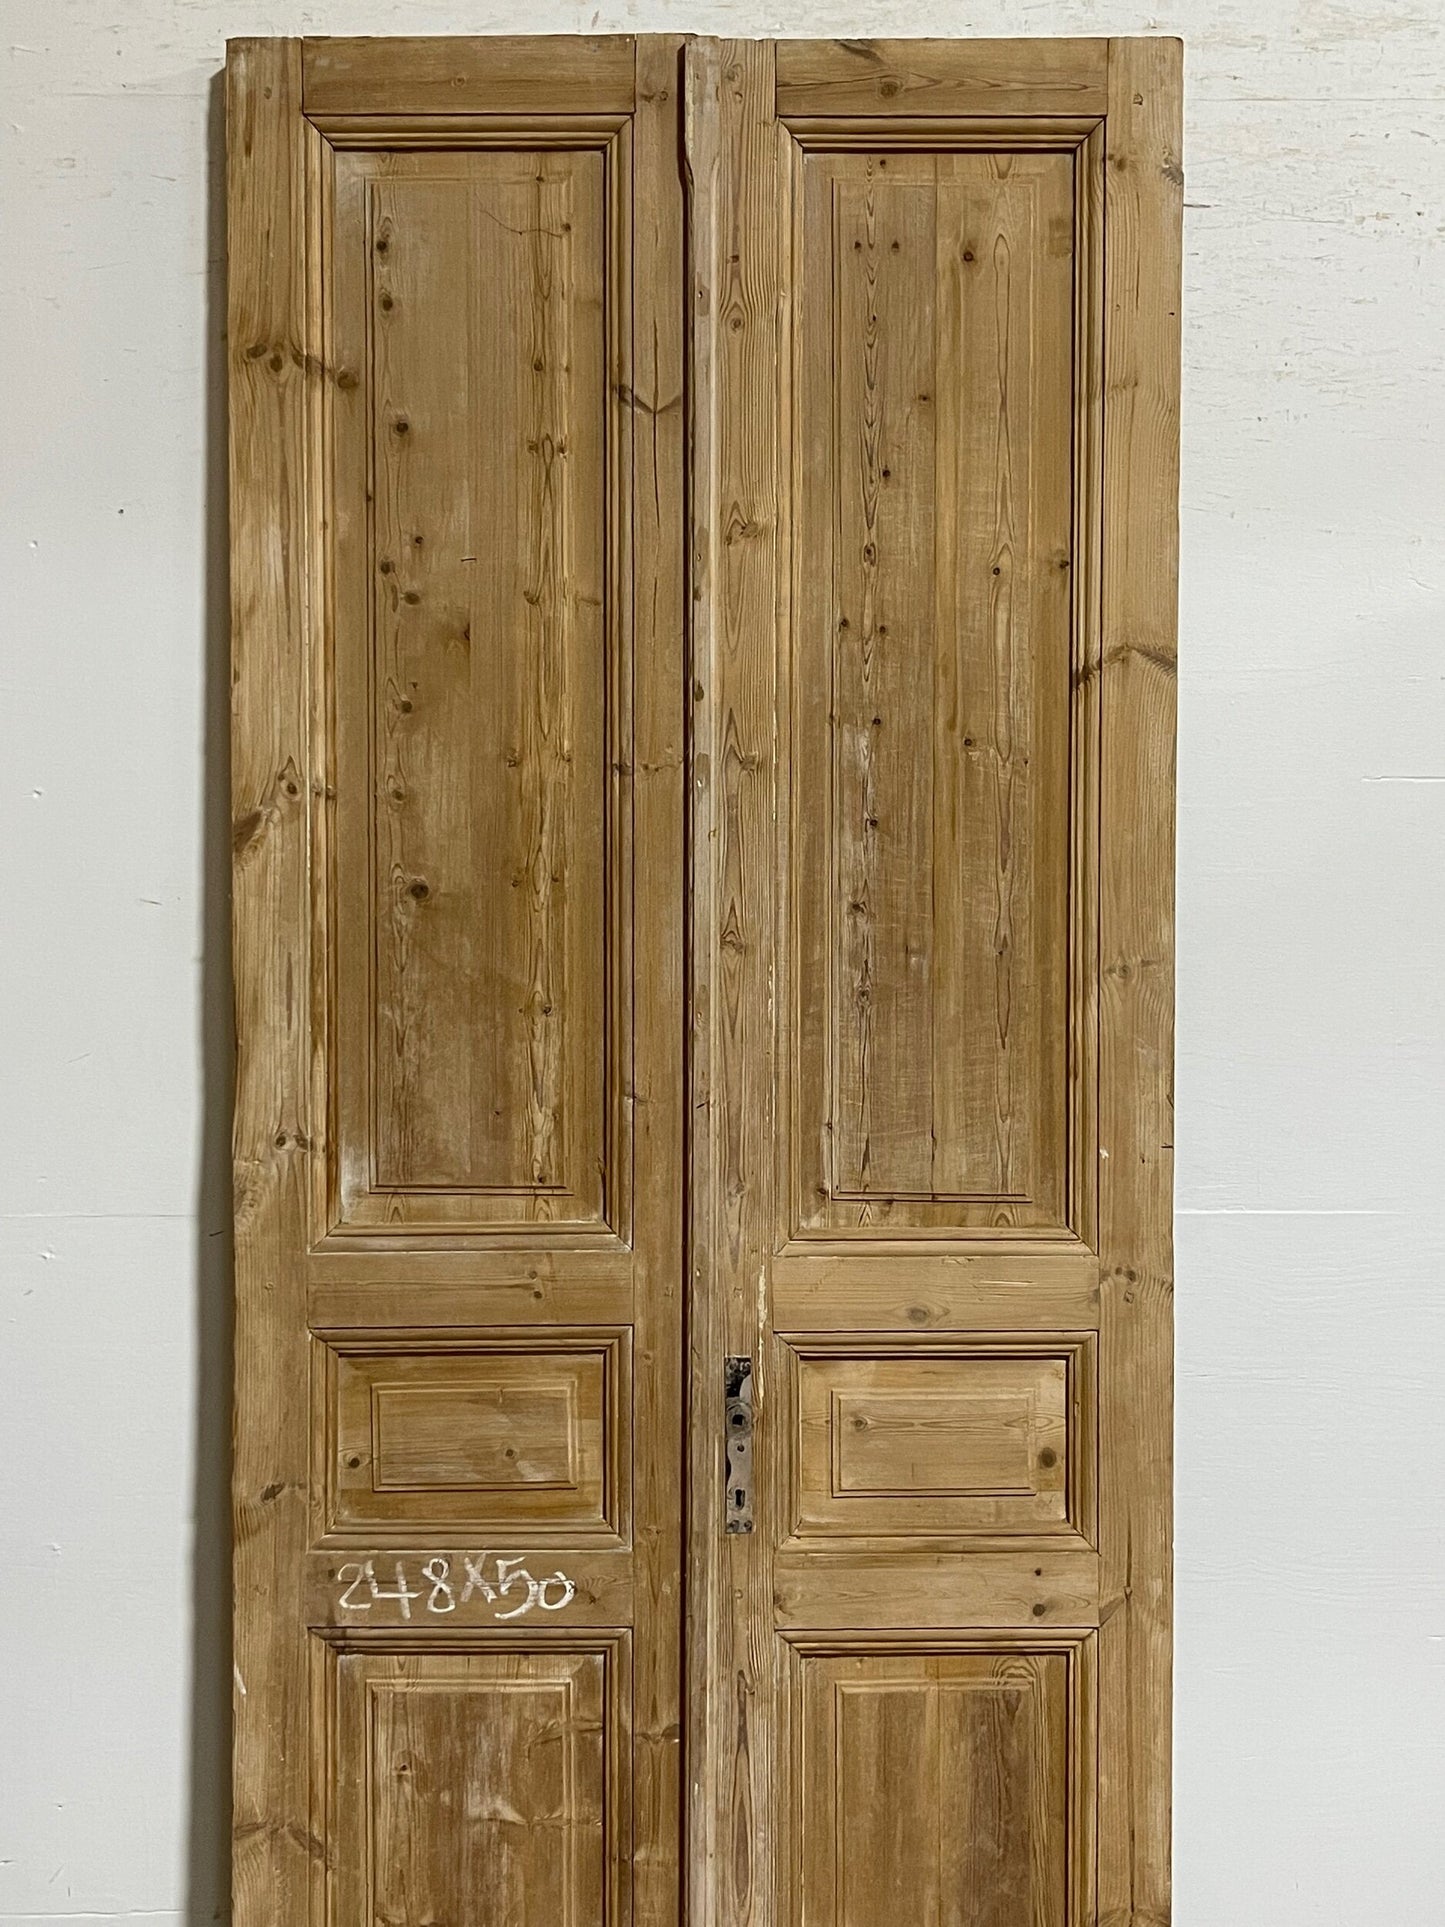 Antique French panel doors (97.75x40) I170